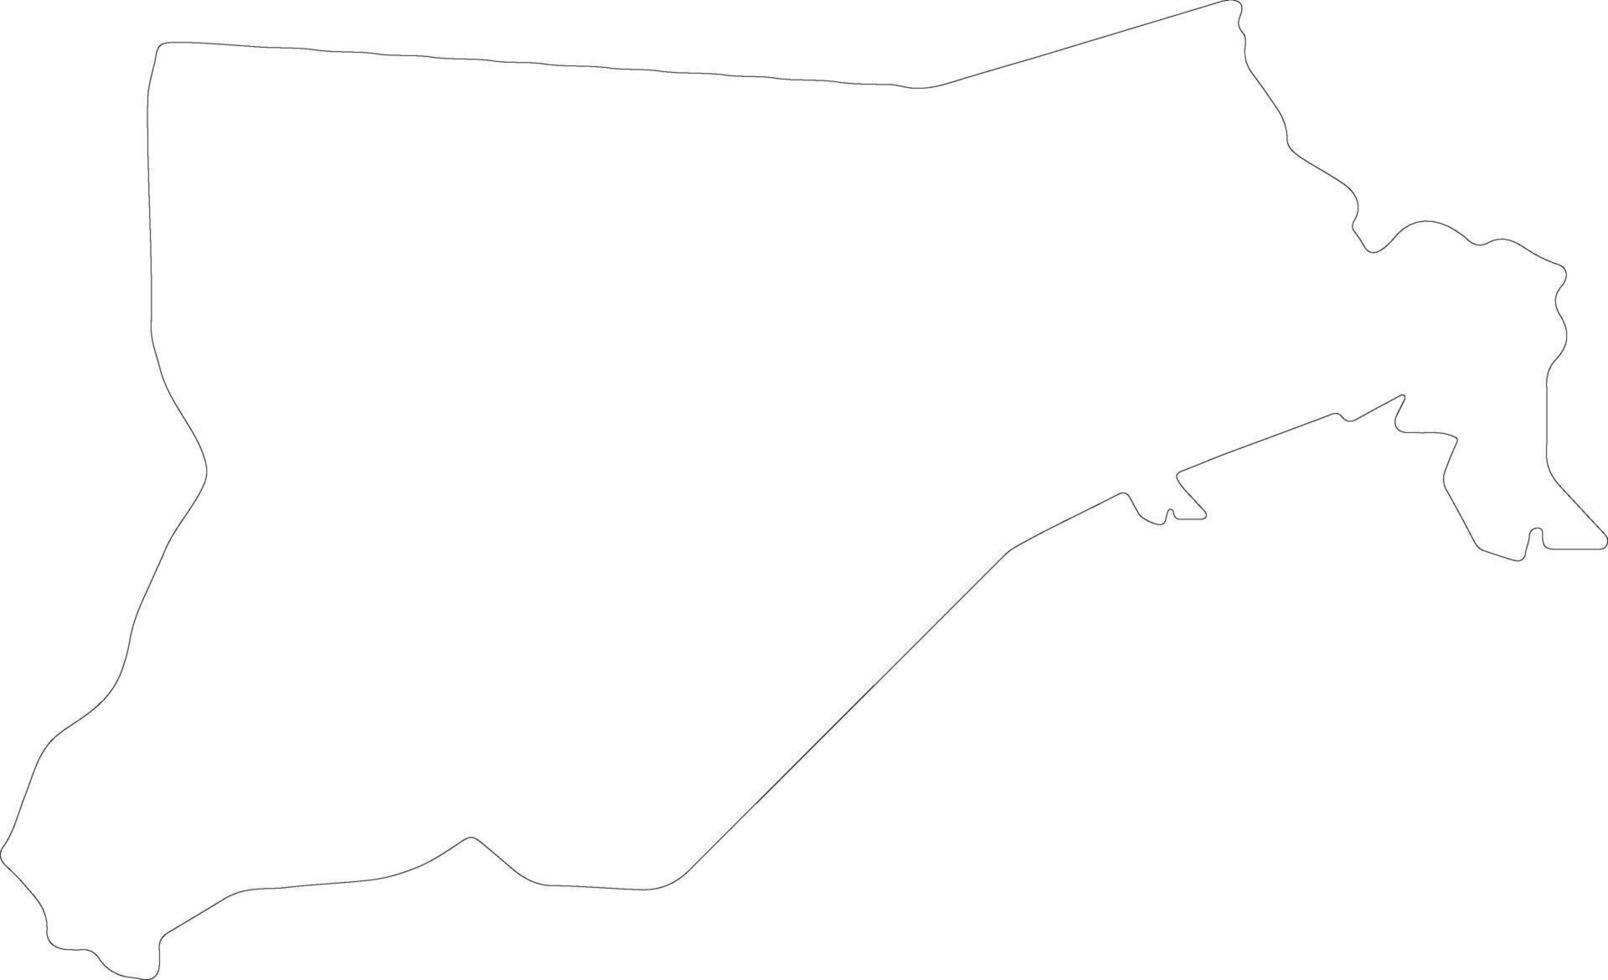 Eastern Equatoria S Sudan outline map vector